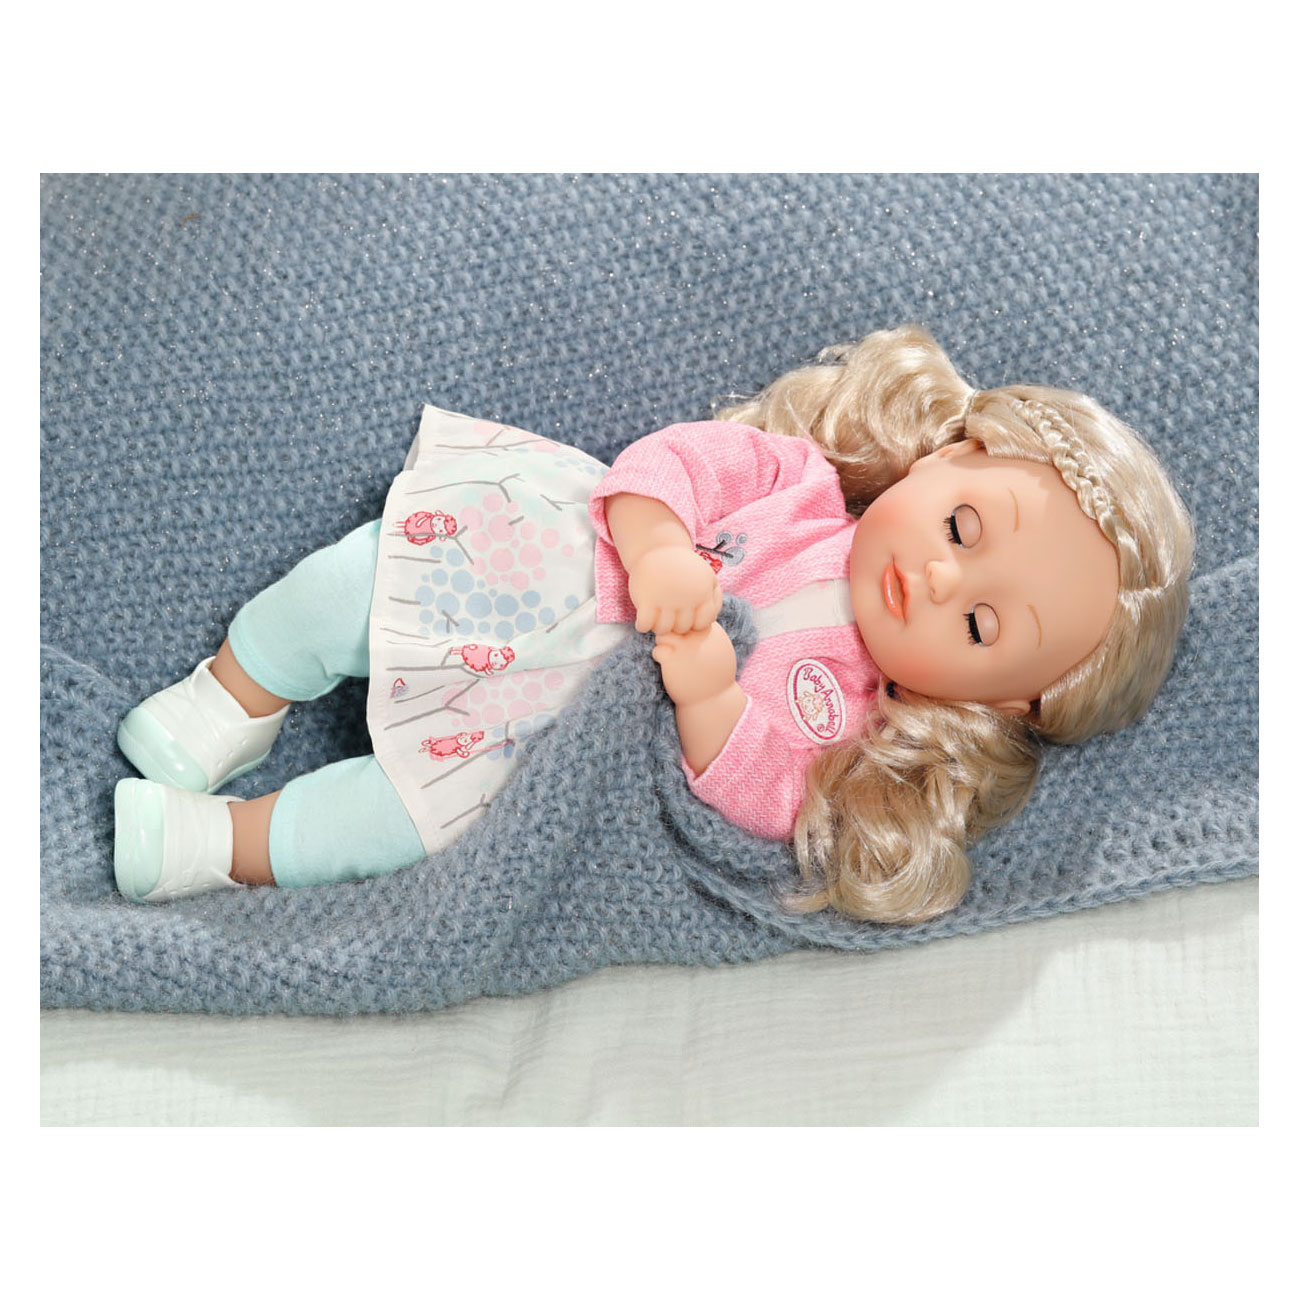 Baby Annabell Kleine Sophia-Puppe, 36 cm